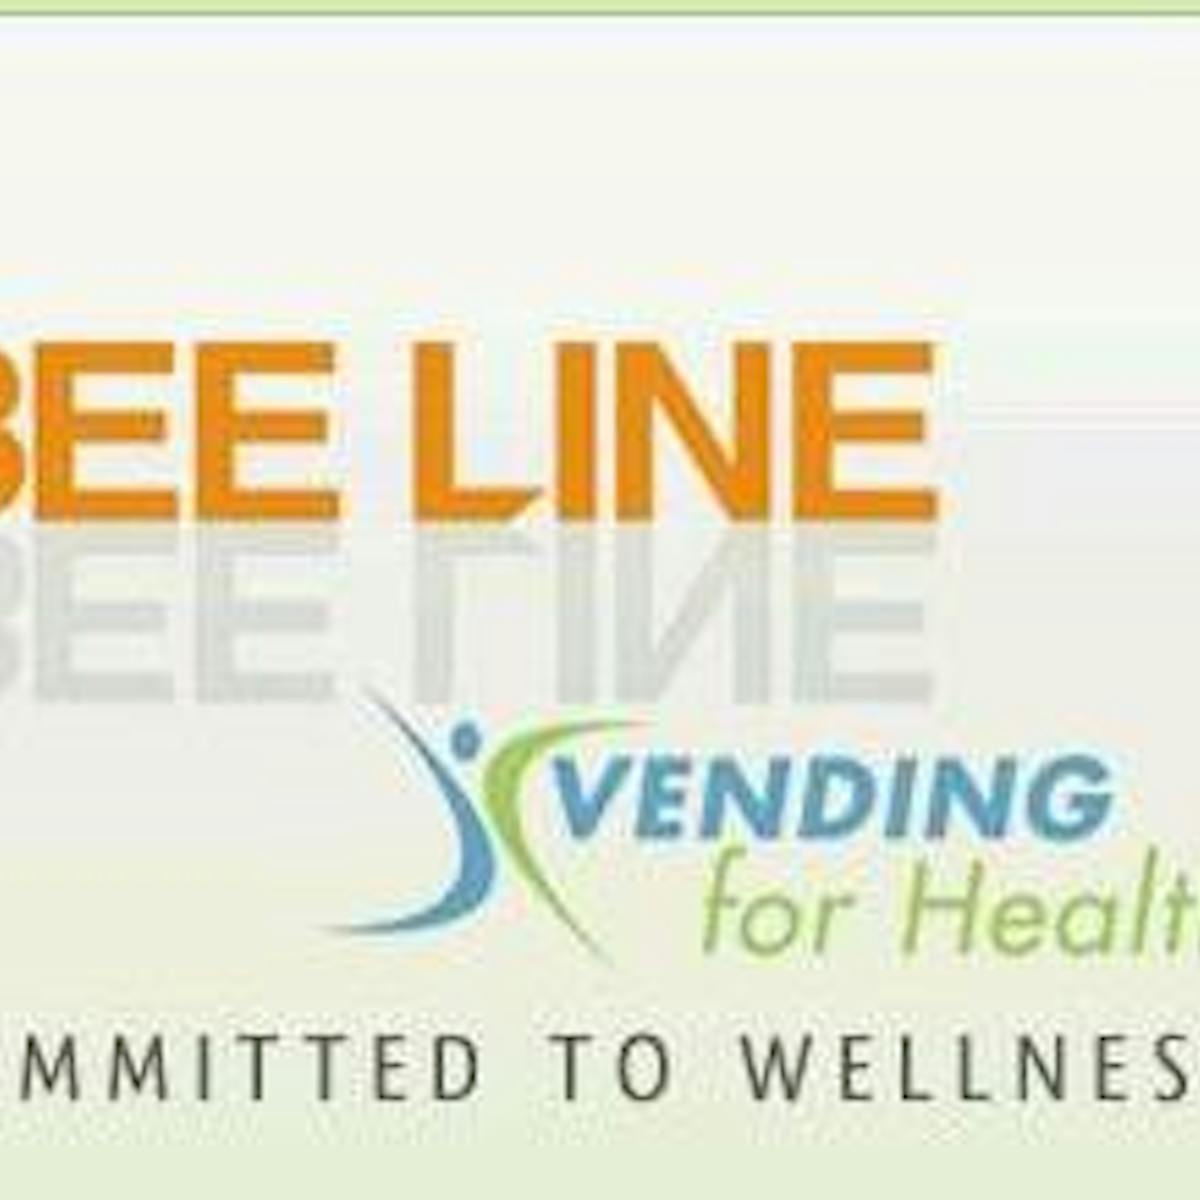 Bee Line Logo